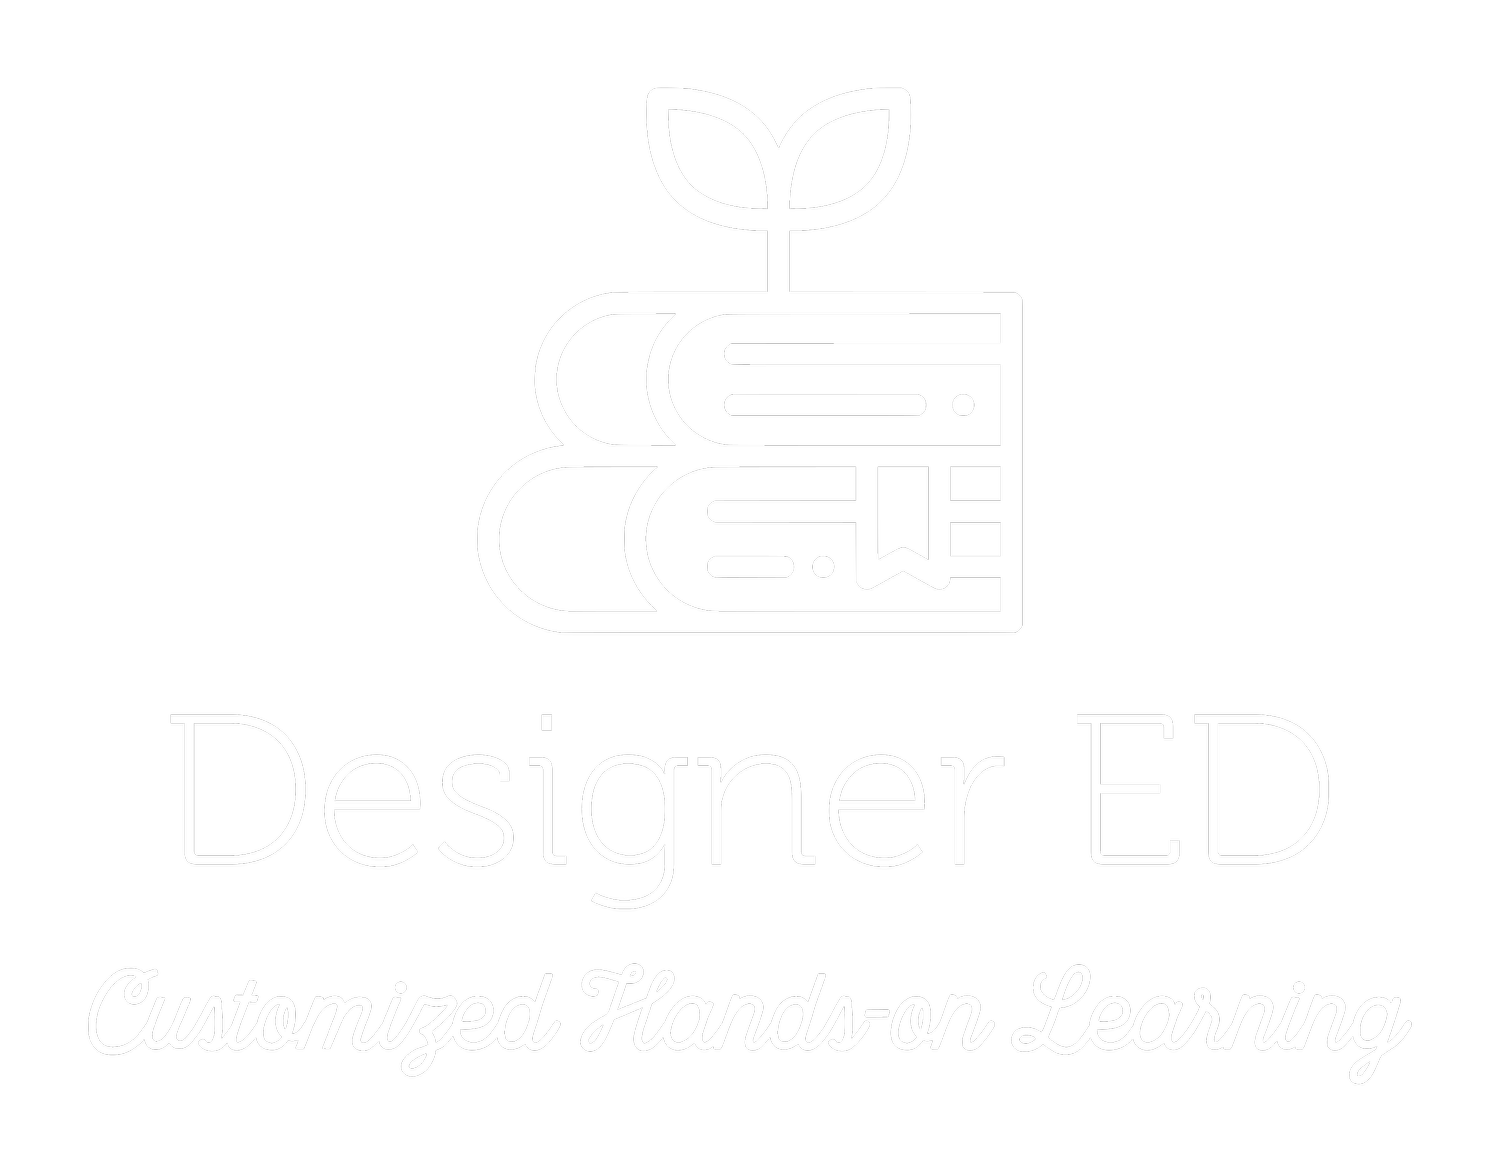 Designer Education LLC